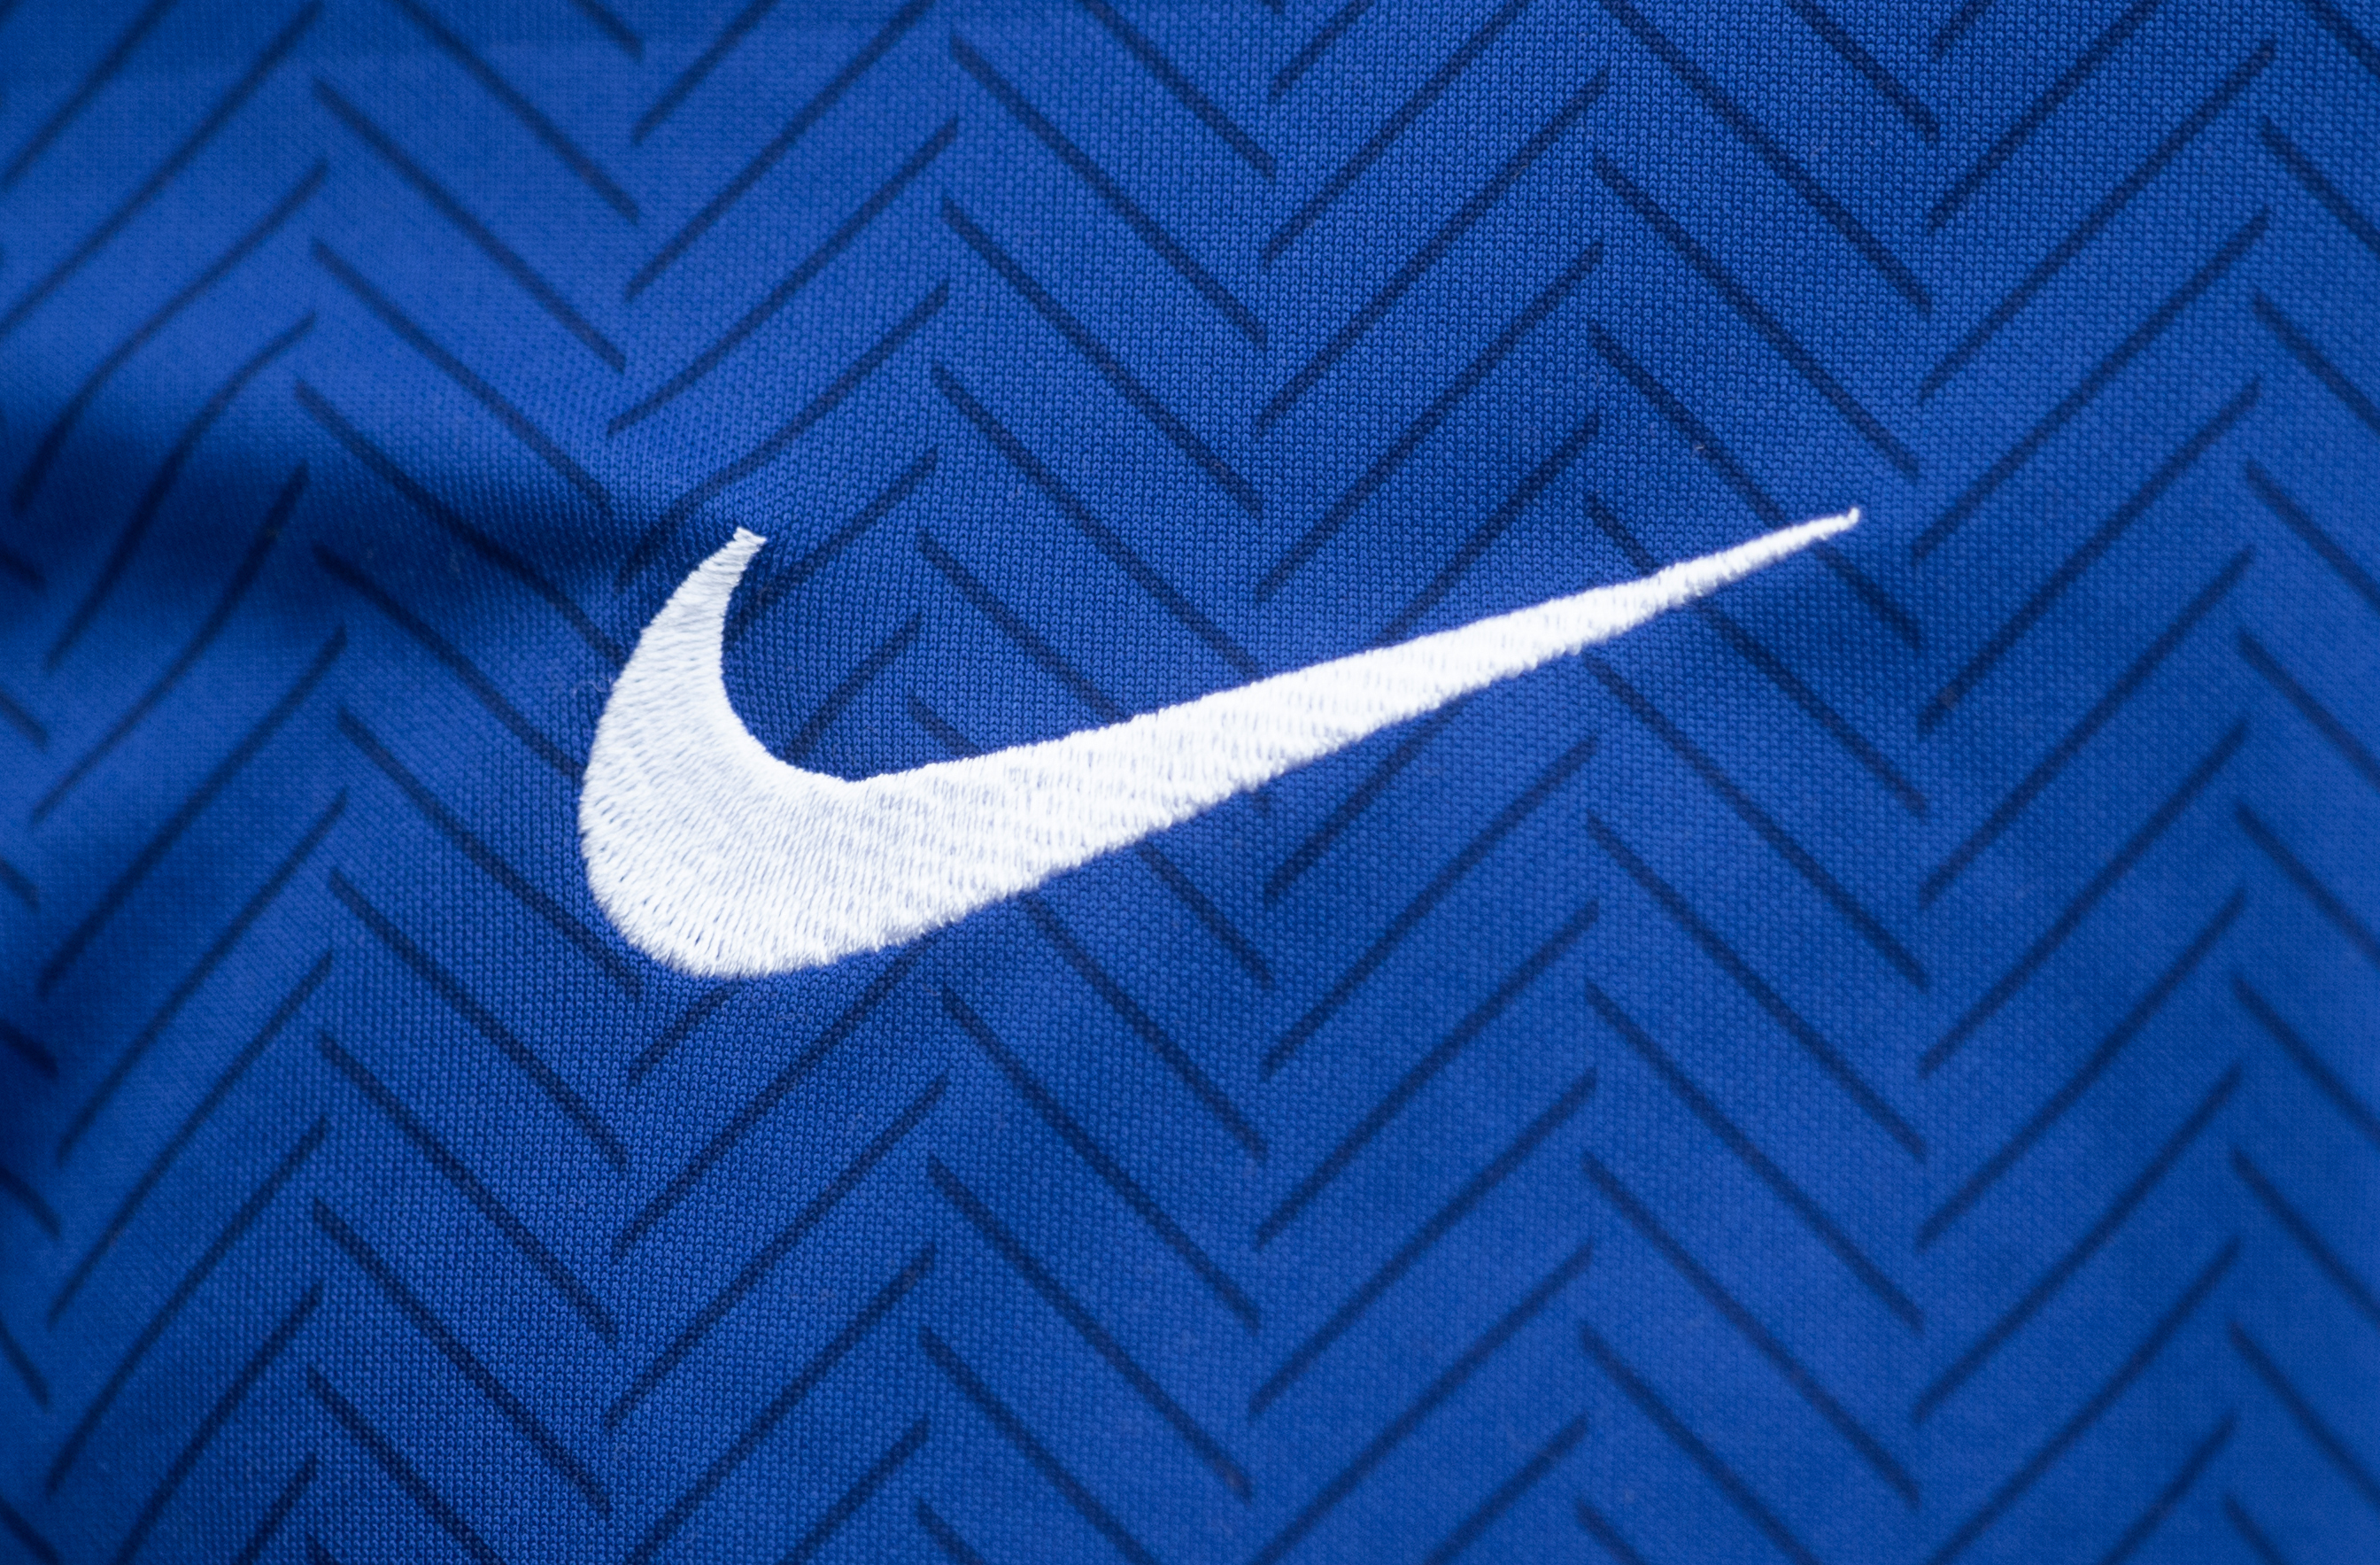 Nike product testing